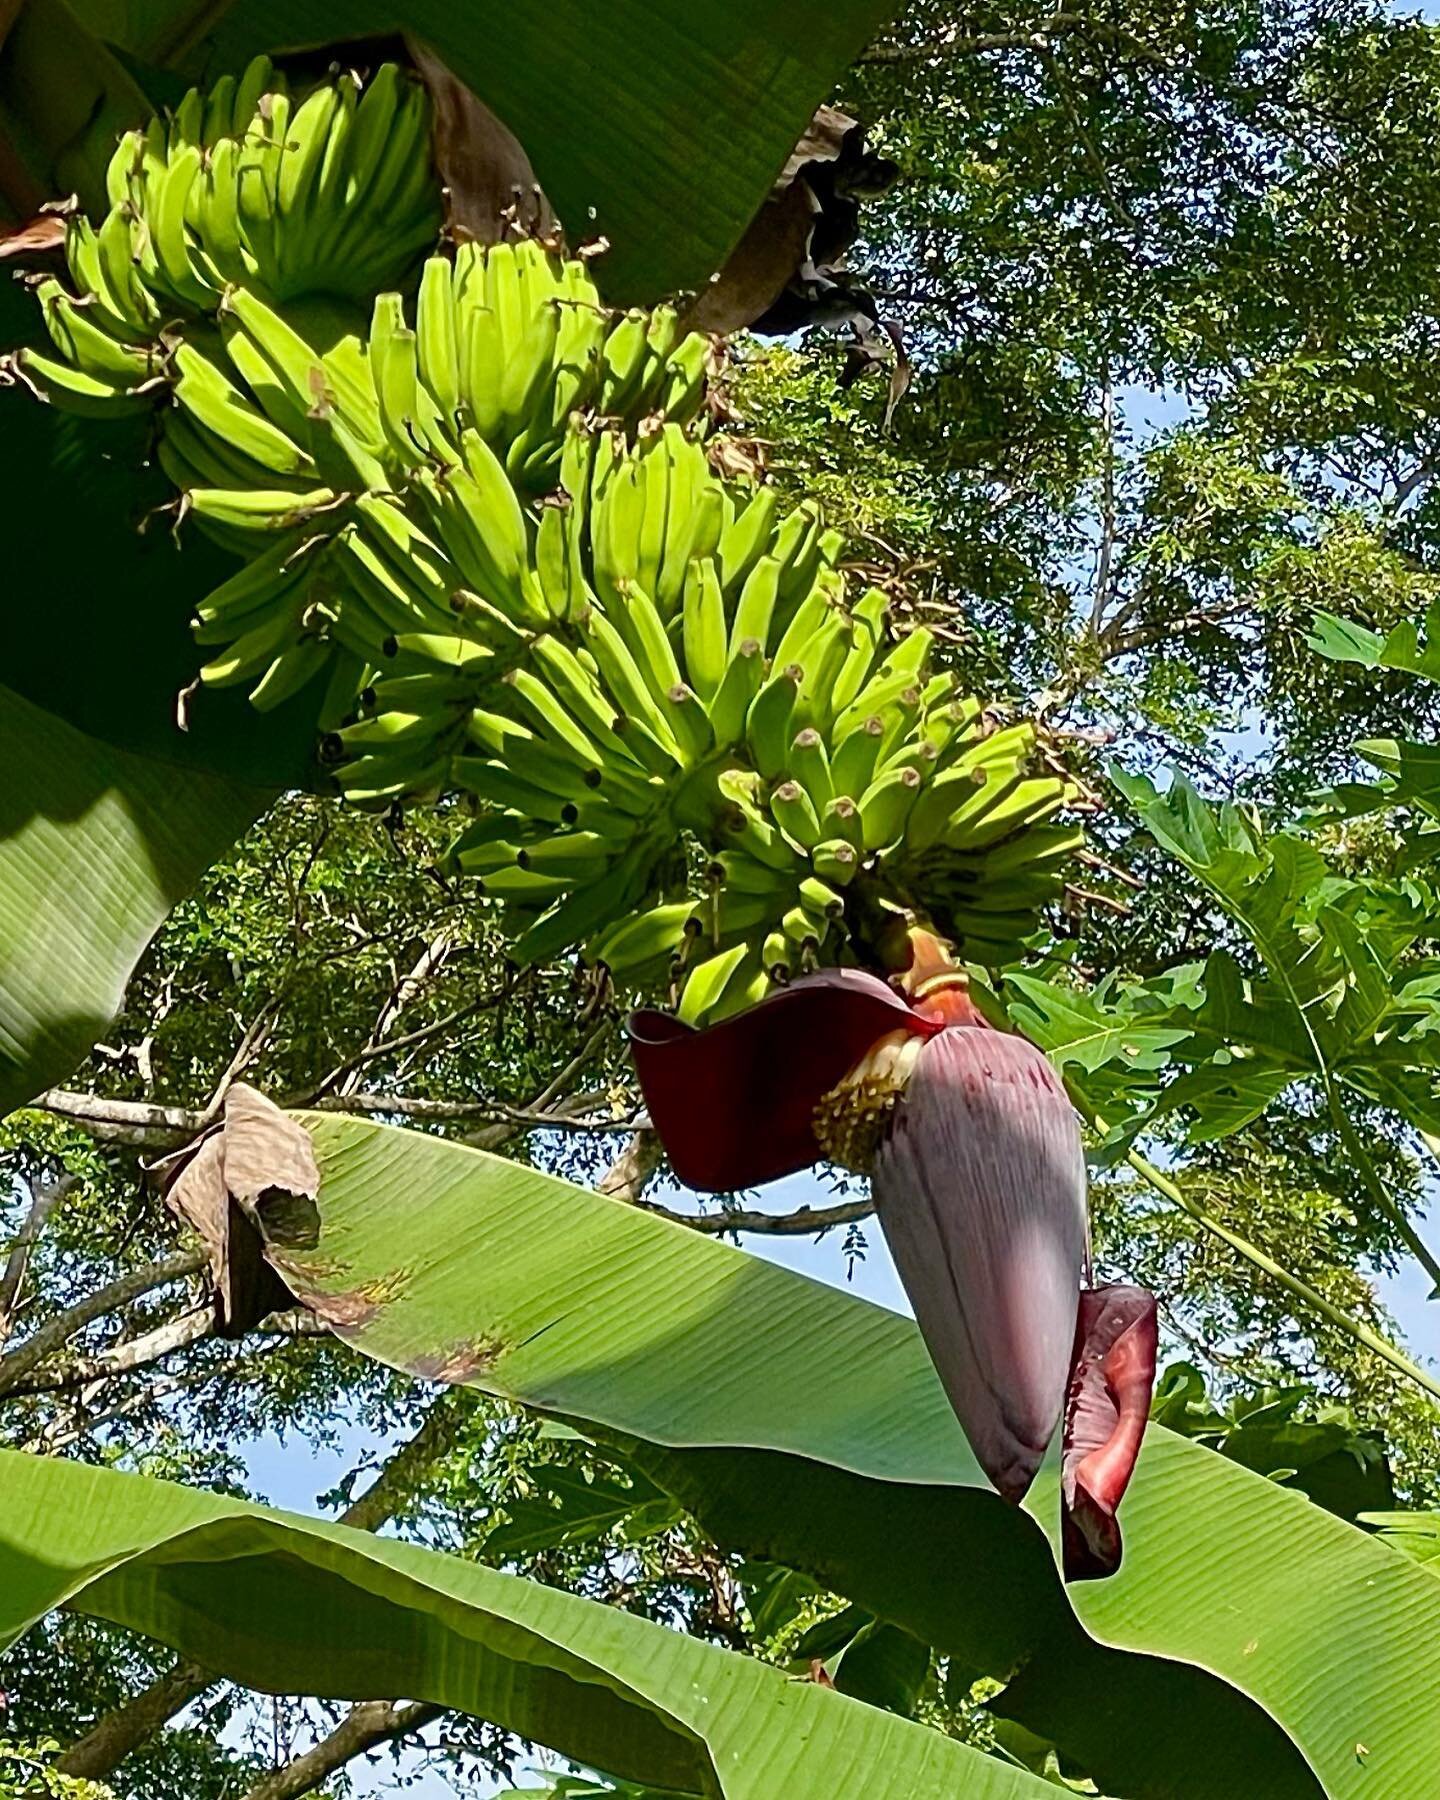 Bananas and Papayas. All Day Long. 

#bananas #papayas #fruittrees #backyardharvest #fiji #savusavu #southpacific #seriouslyfreshfruit #vanaulevuisland